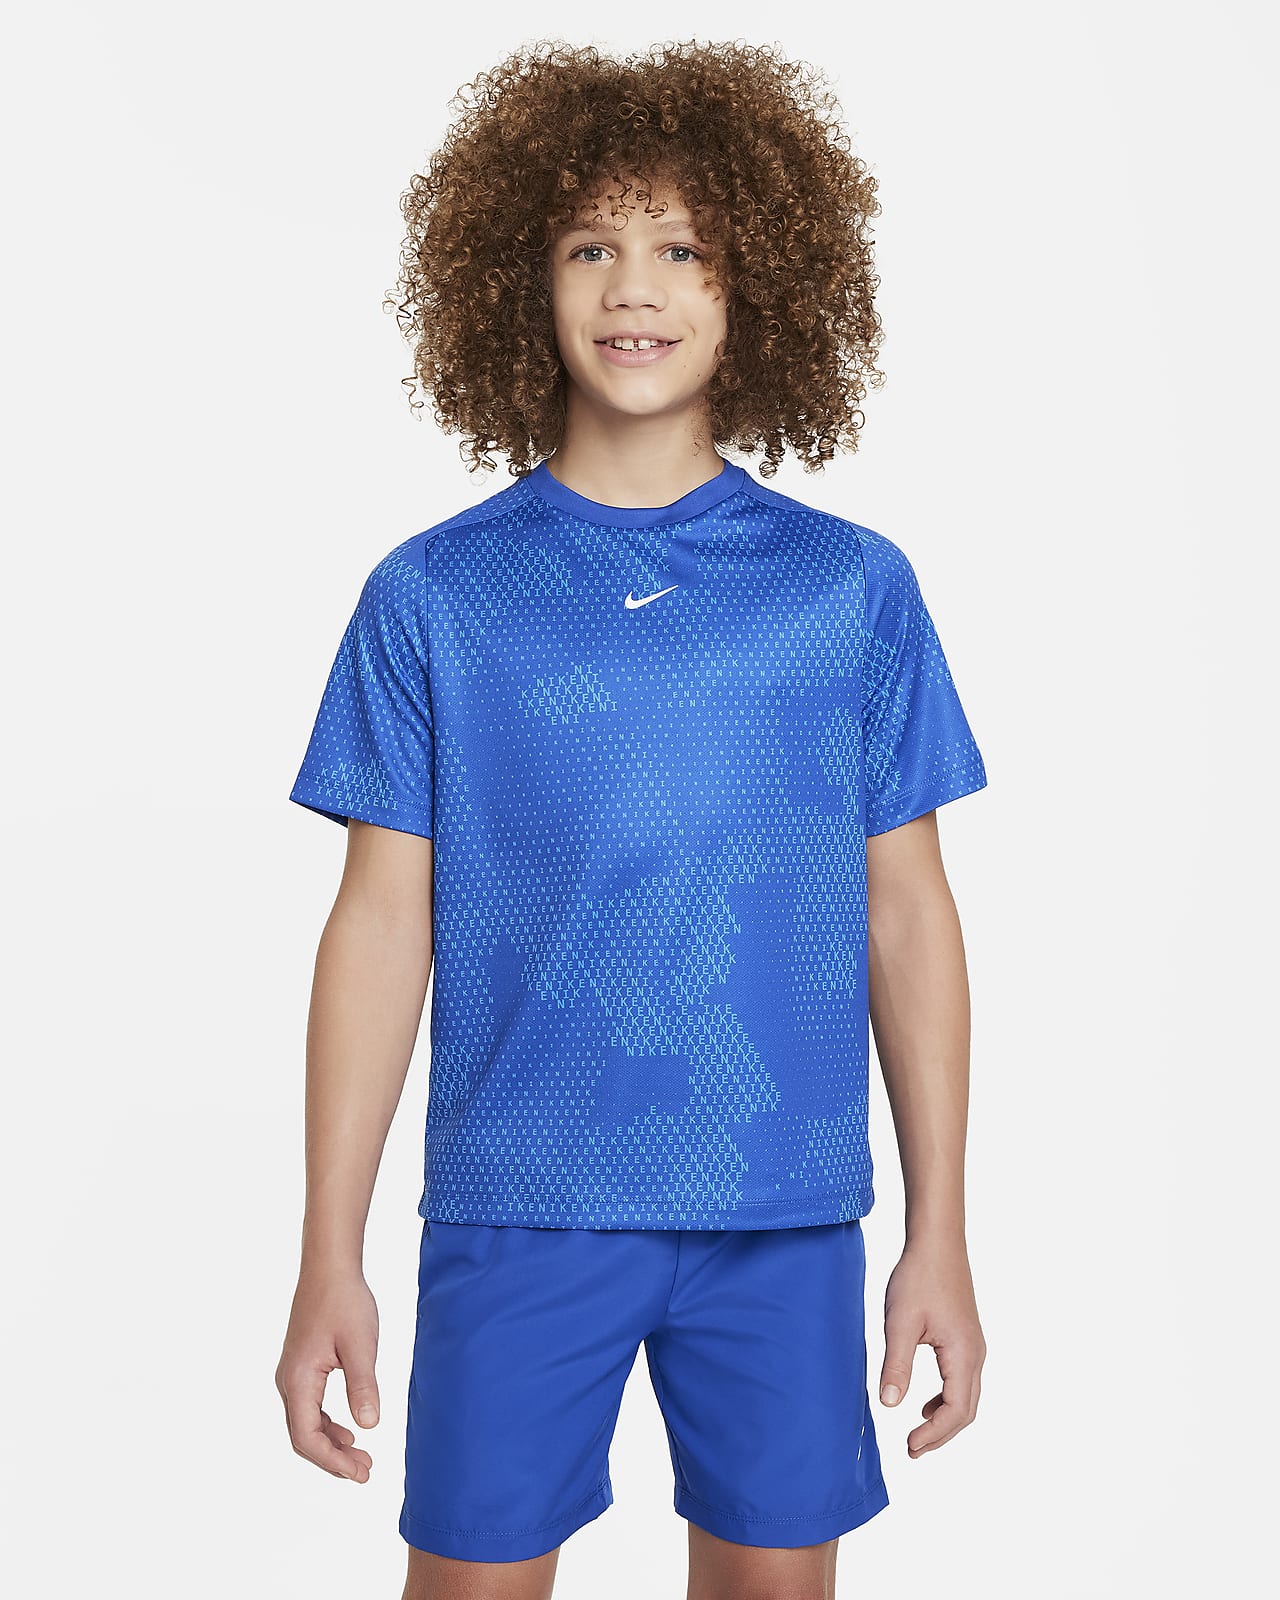 Camisola de manga curta Dri-FIT Nike Multi Júnior (Rapaz)